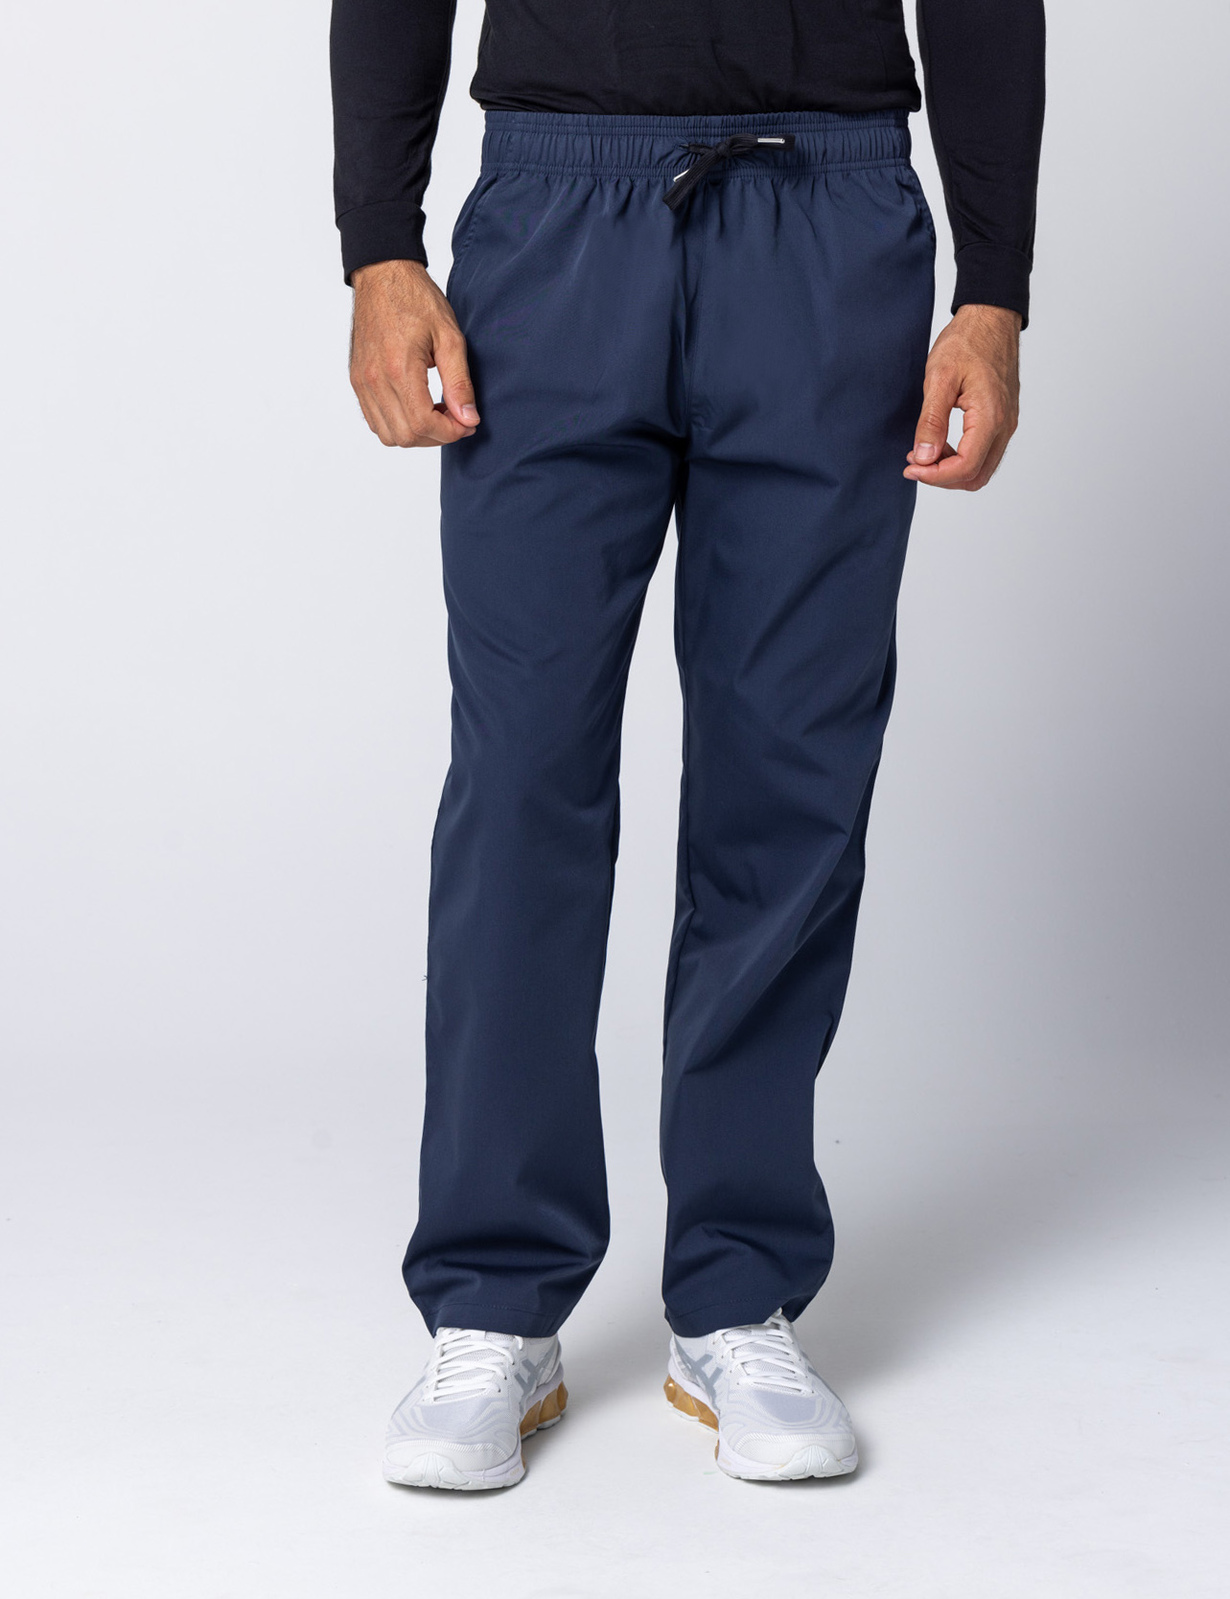 Men's Regular Cut Pants - Navy - X Small